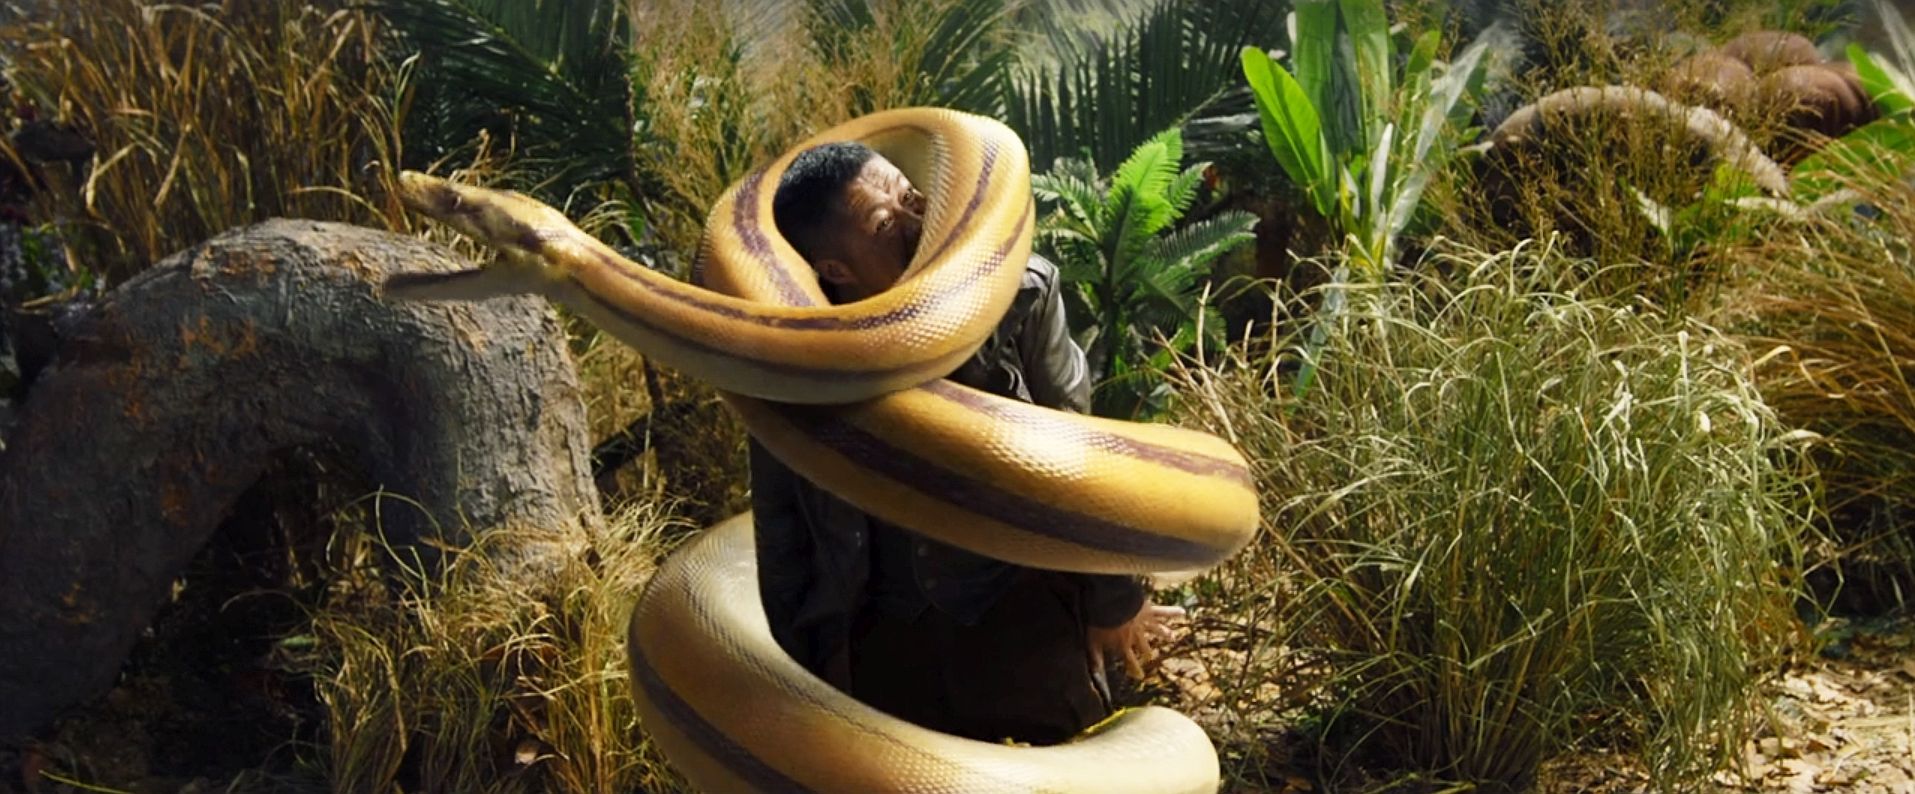 Snake Island Python (2022)- MyDramaList